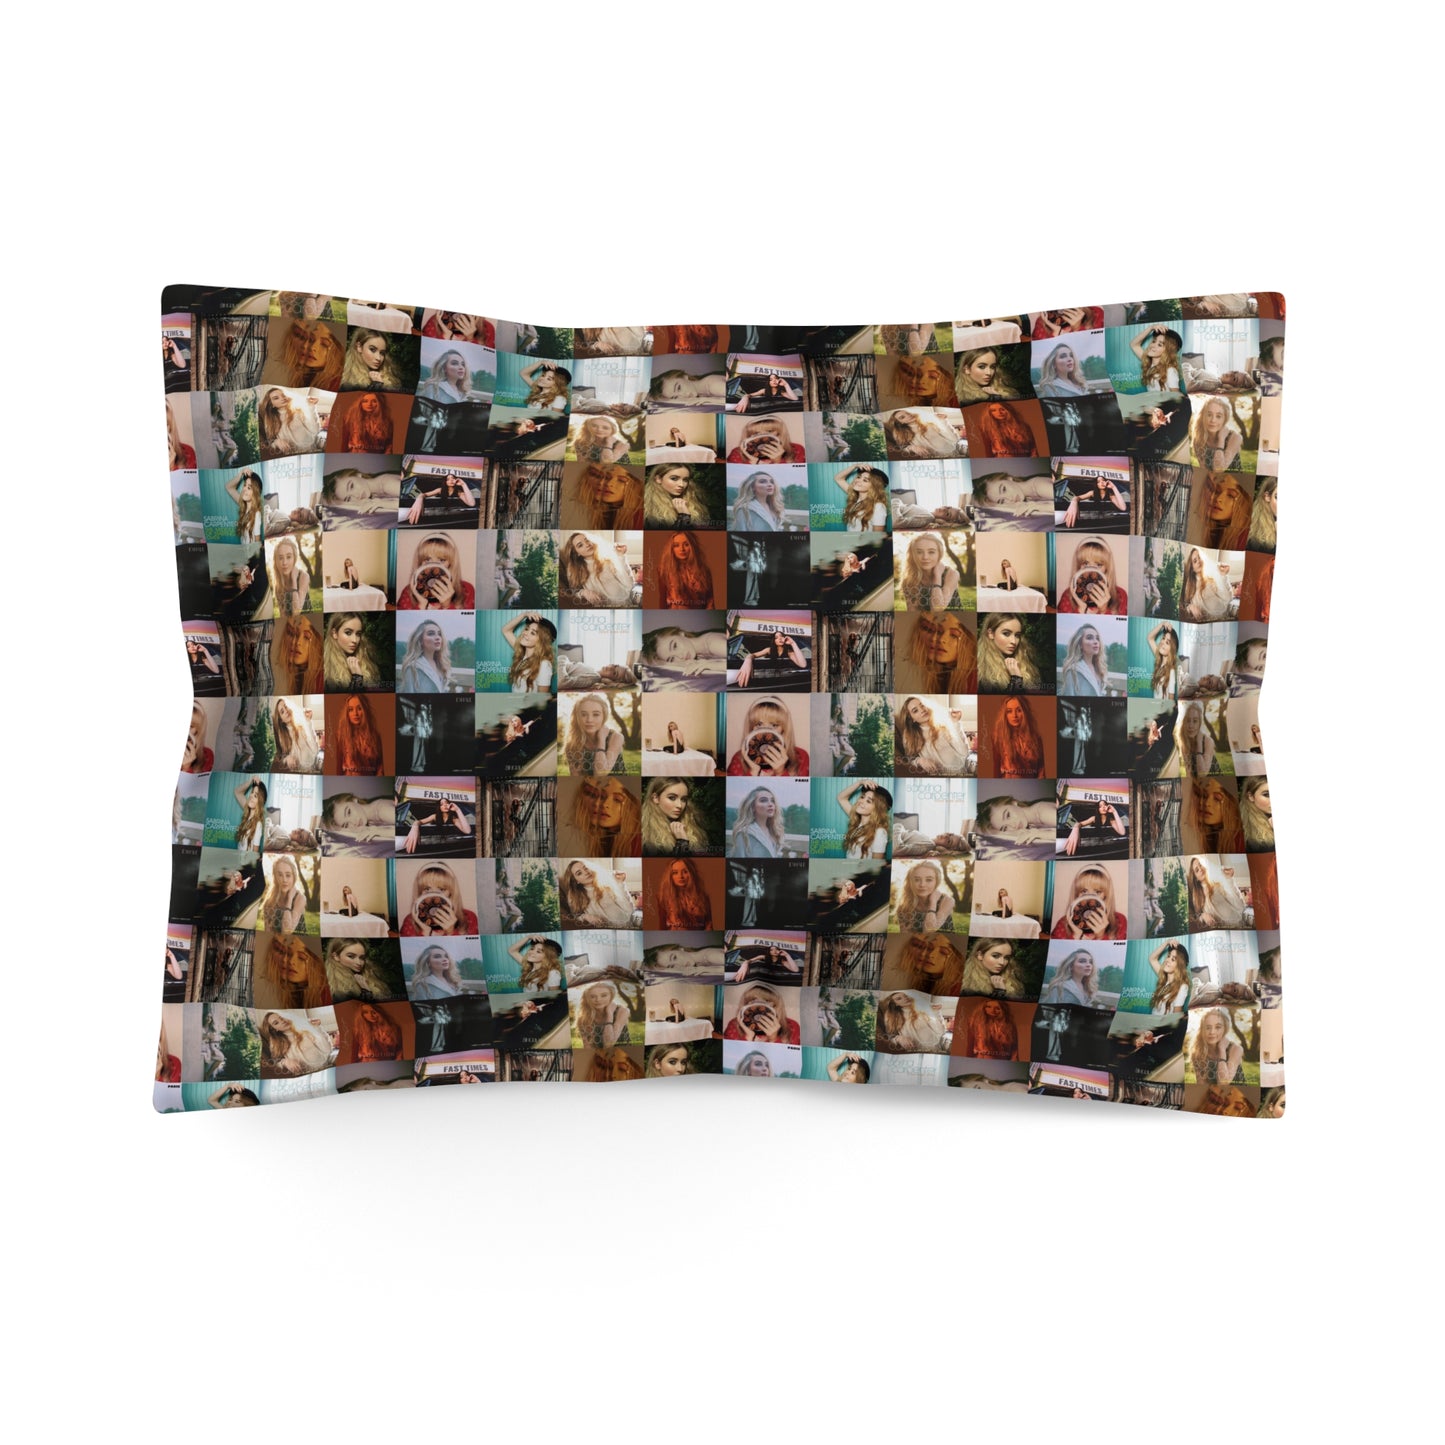 Sabrina Carpenter Album Cover Collage Microfiber Pillow Sham